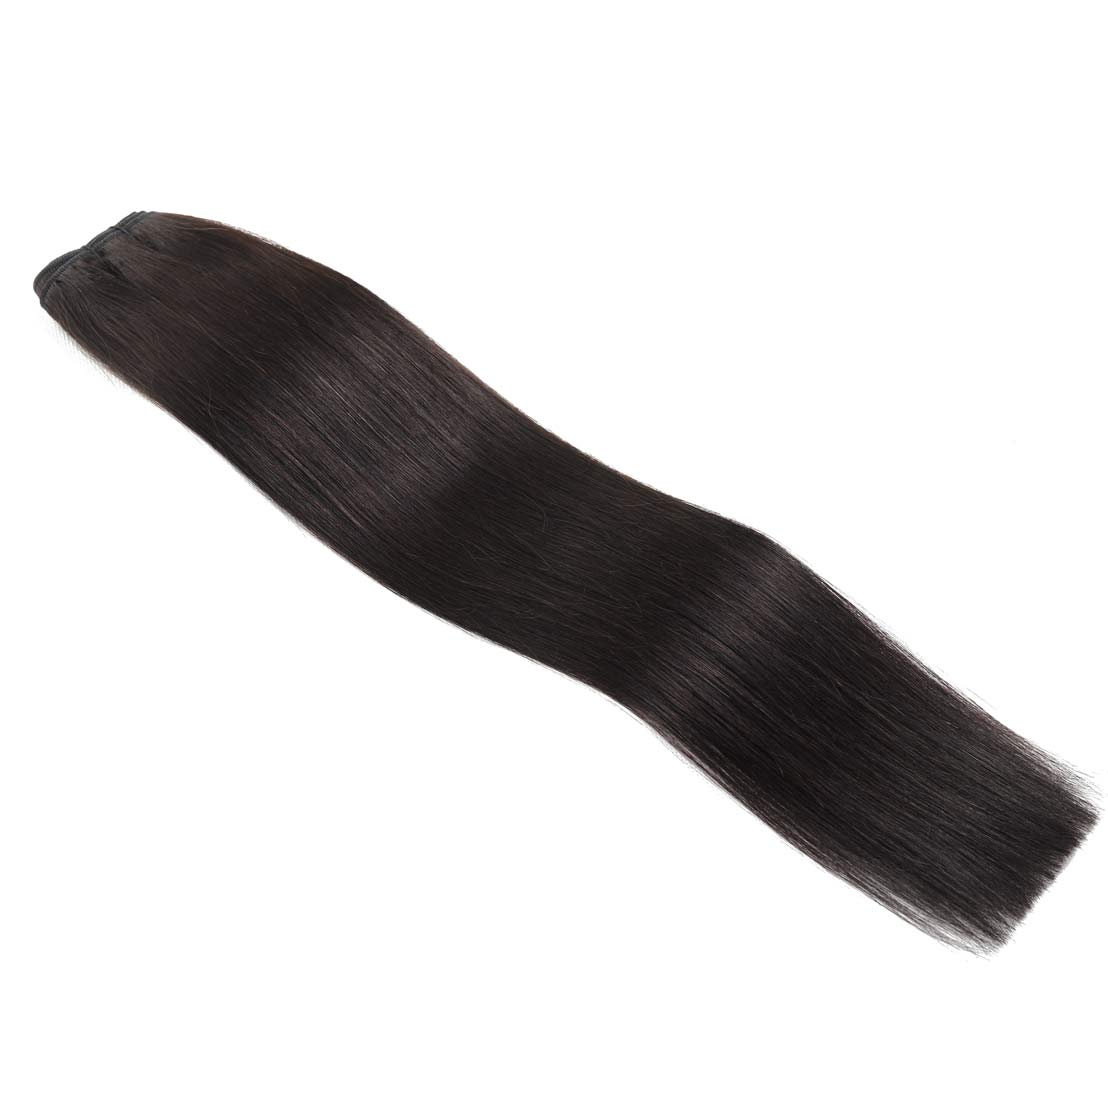 Weft Hair Extensions #1b Natural Black 17” 60 Grams